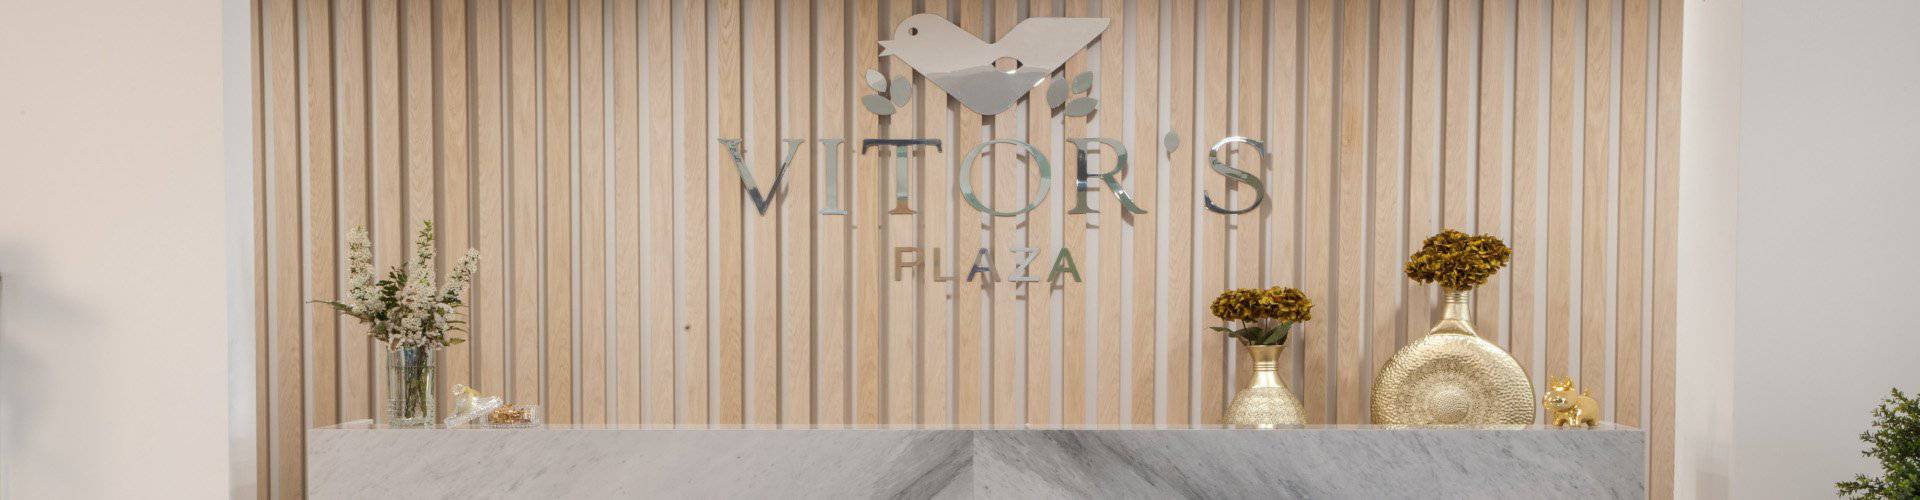 Vitors hotels - Alvor - Reviews